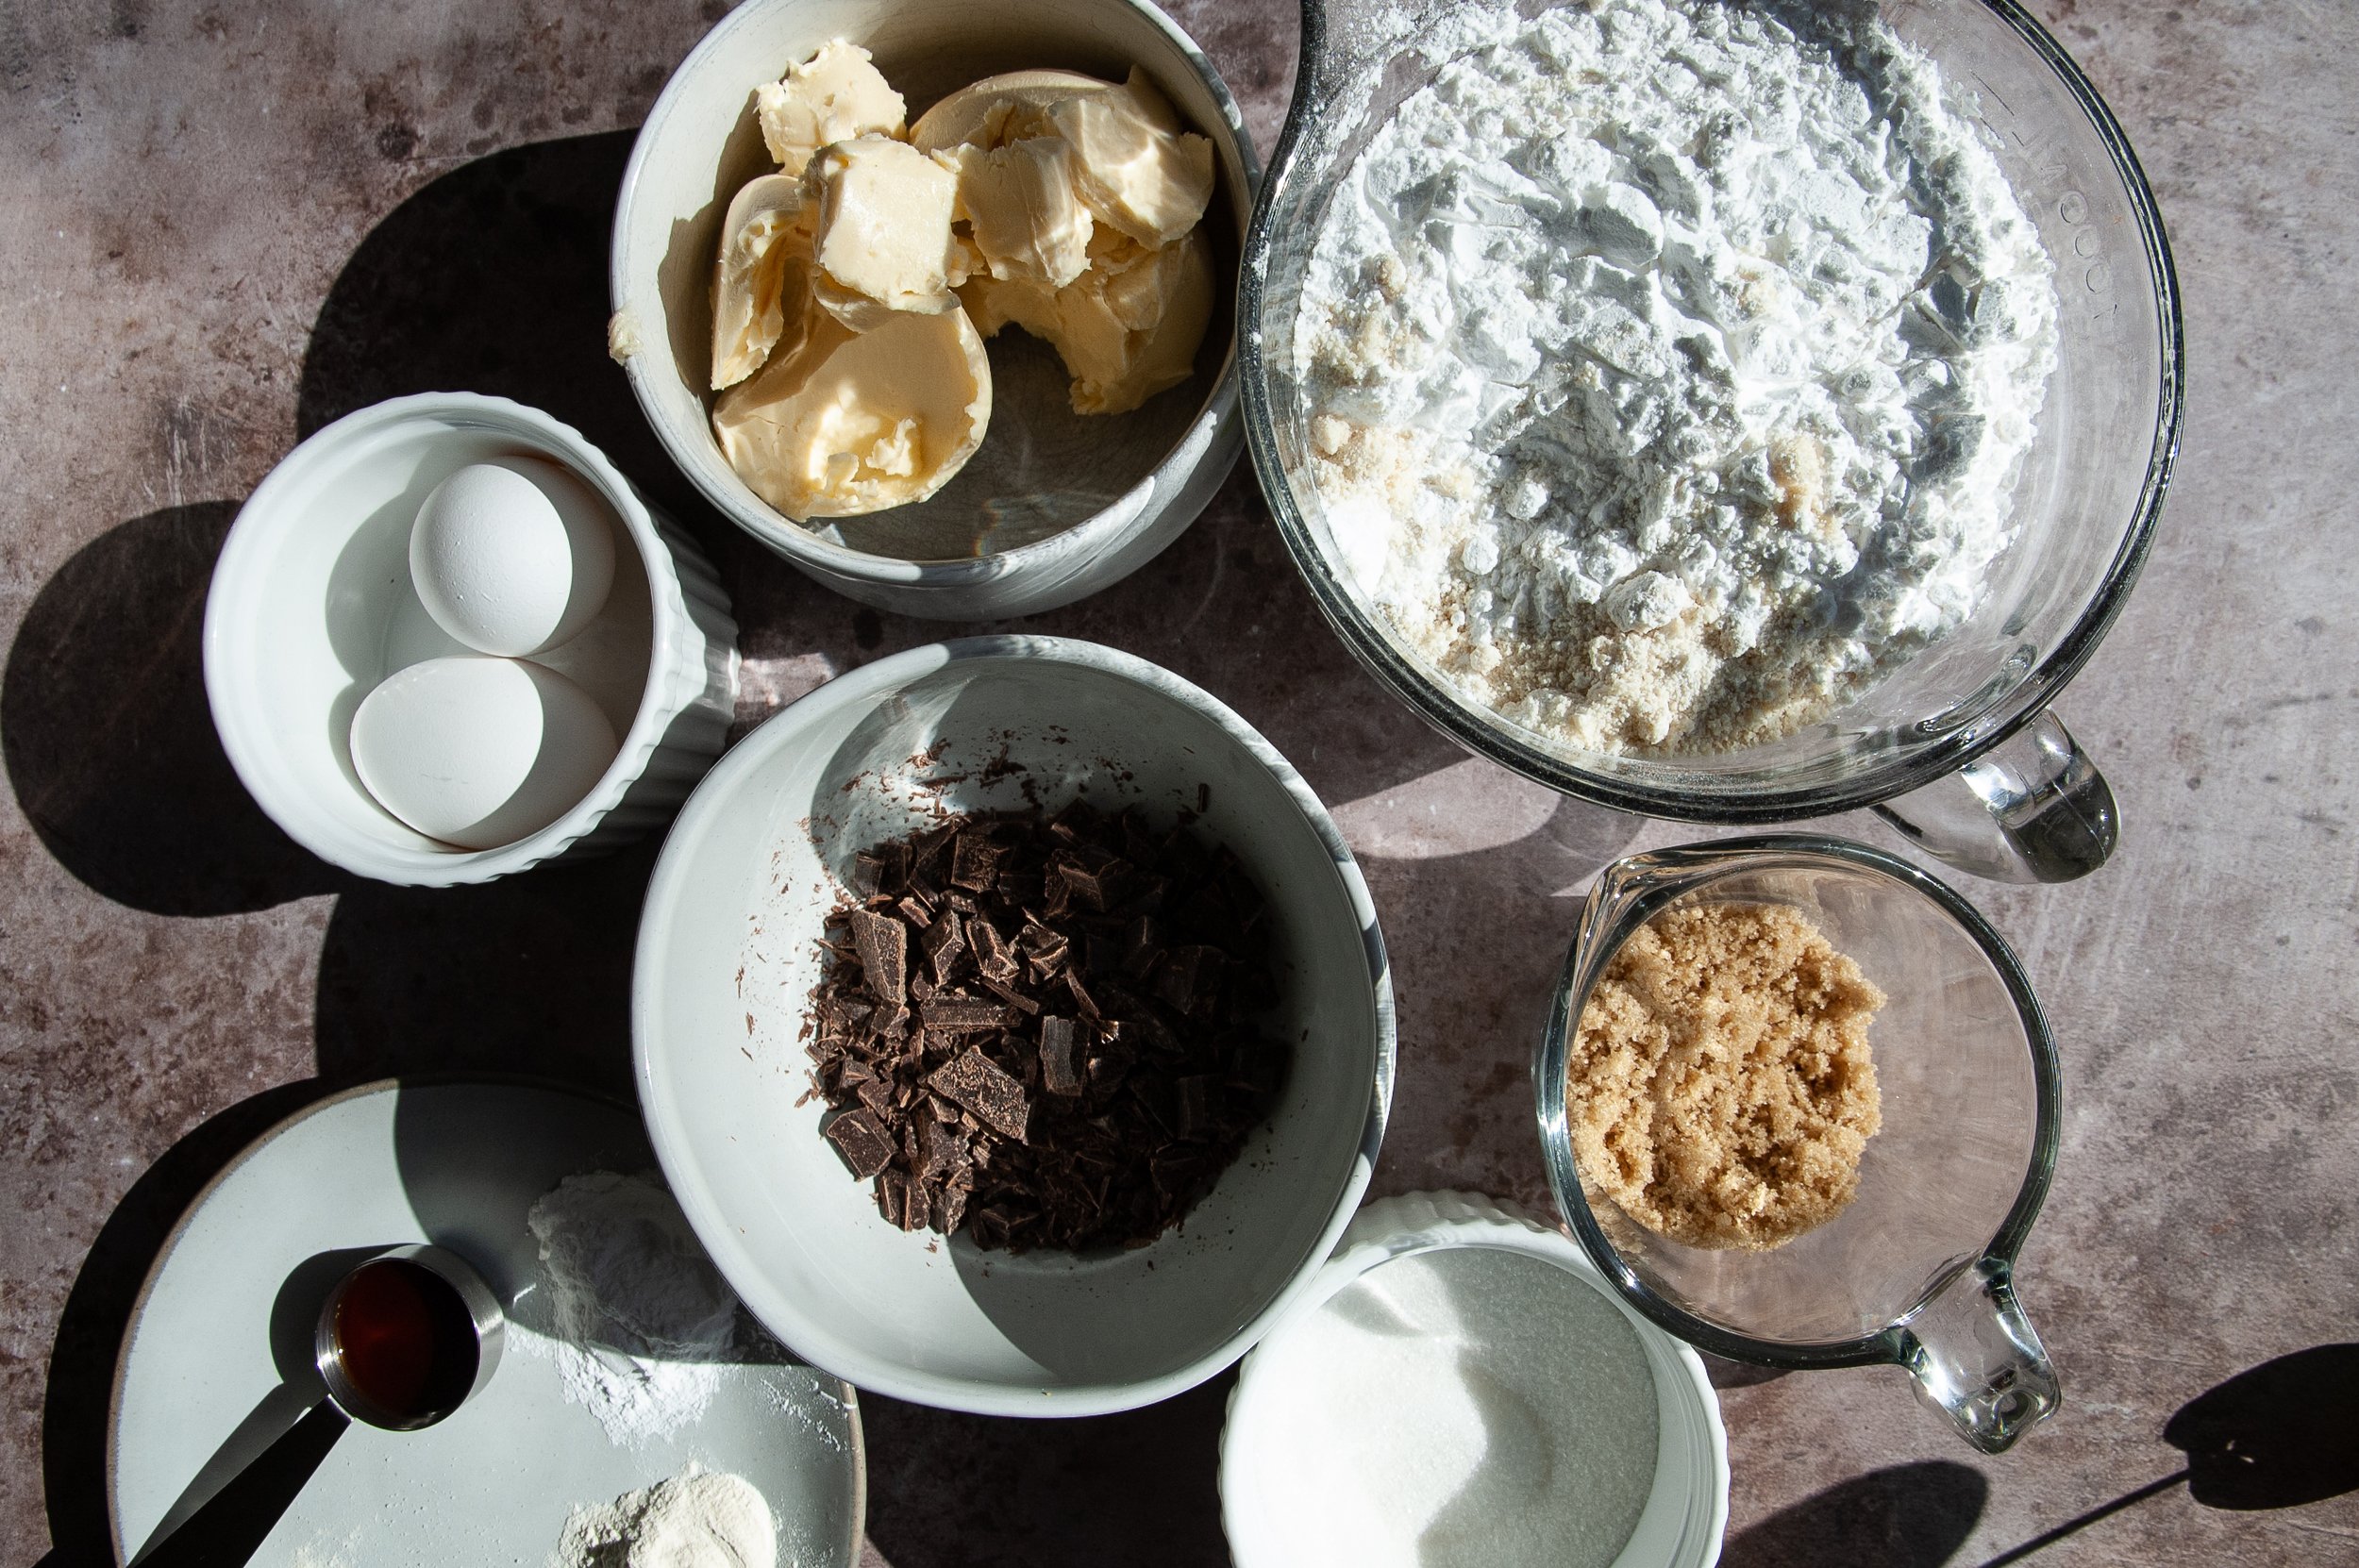 Ingredients for Grain-Free Chocolate Chip Cookies